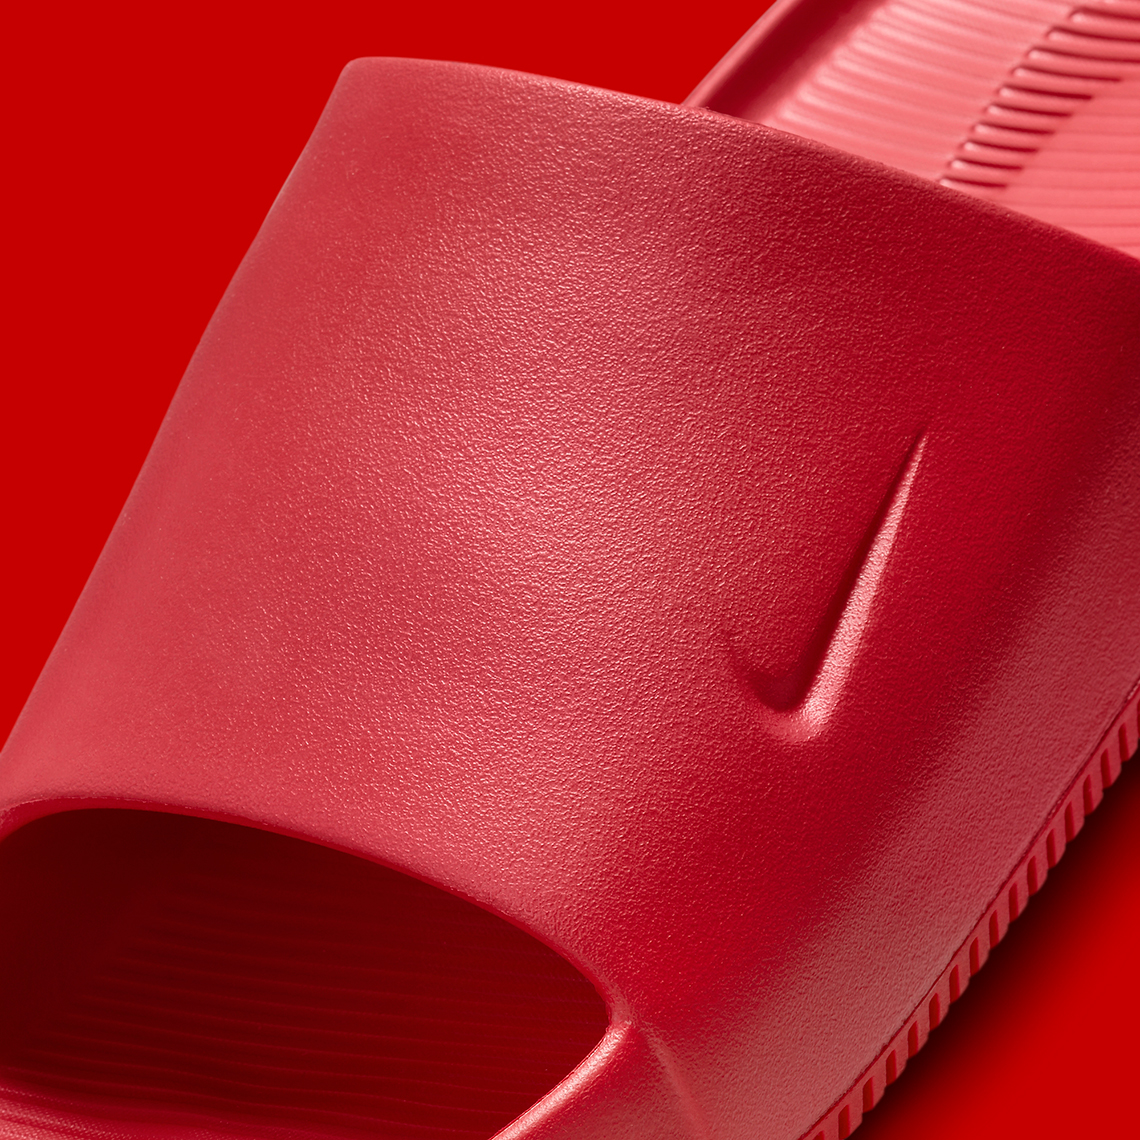 Nike Calm Slide Red Fd4116 600 4